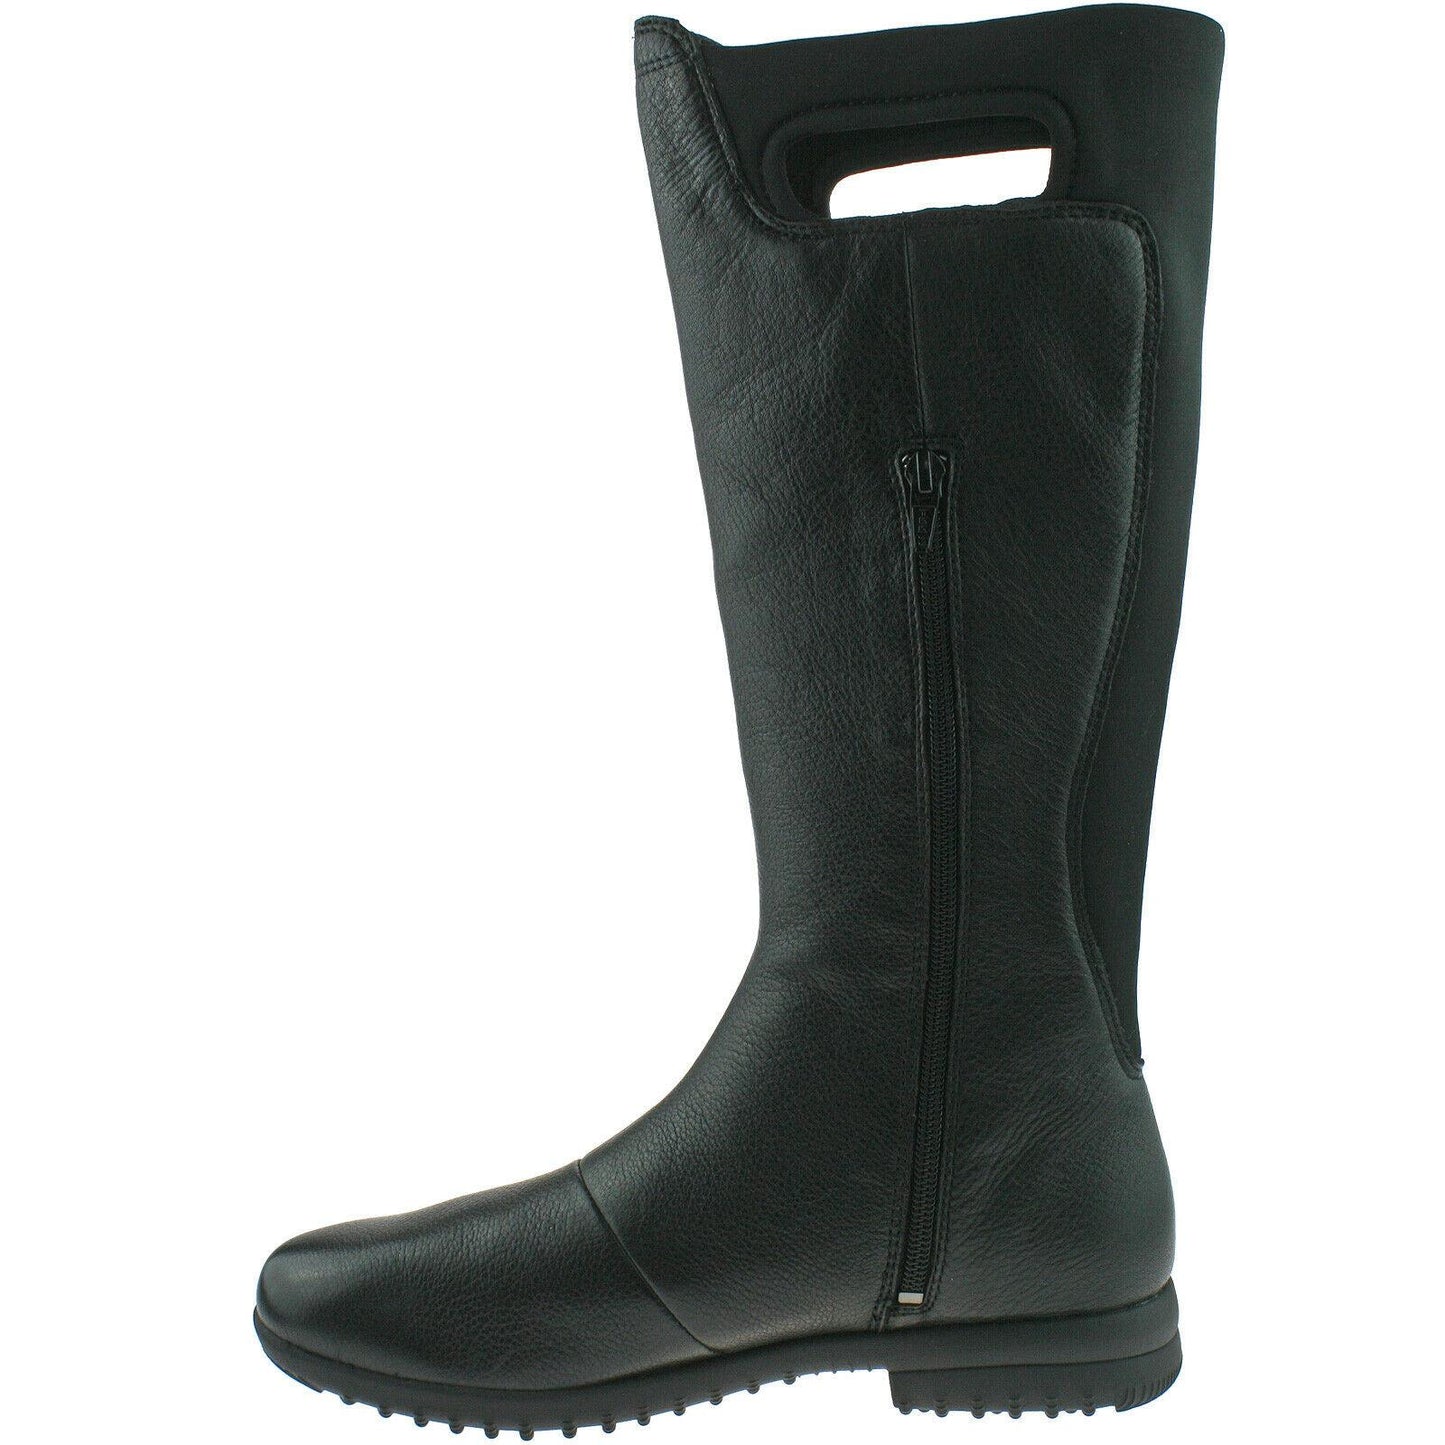 Ladies Bogs Alexandria Black Tall Waterproof Leather Boots 71576